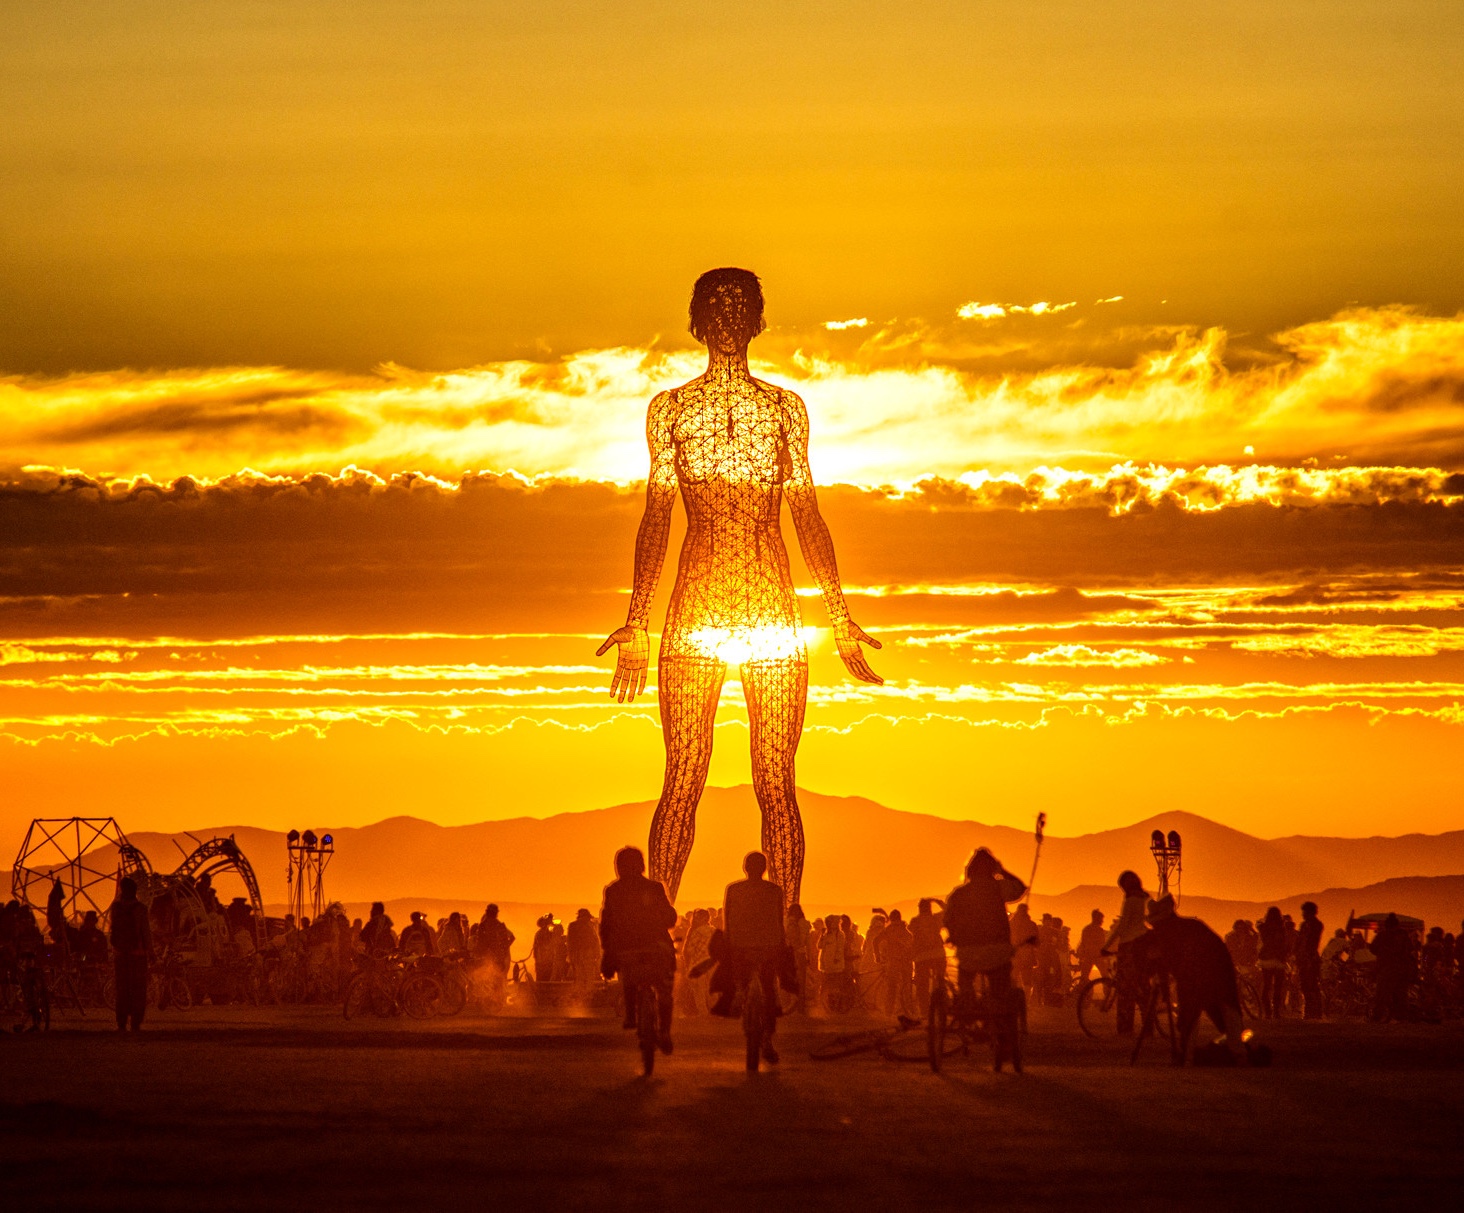 I met seven women from the Burning Man community... 